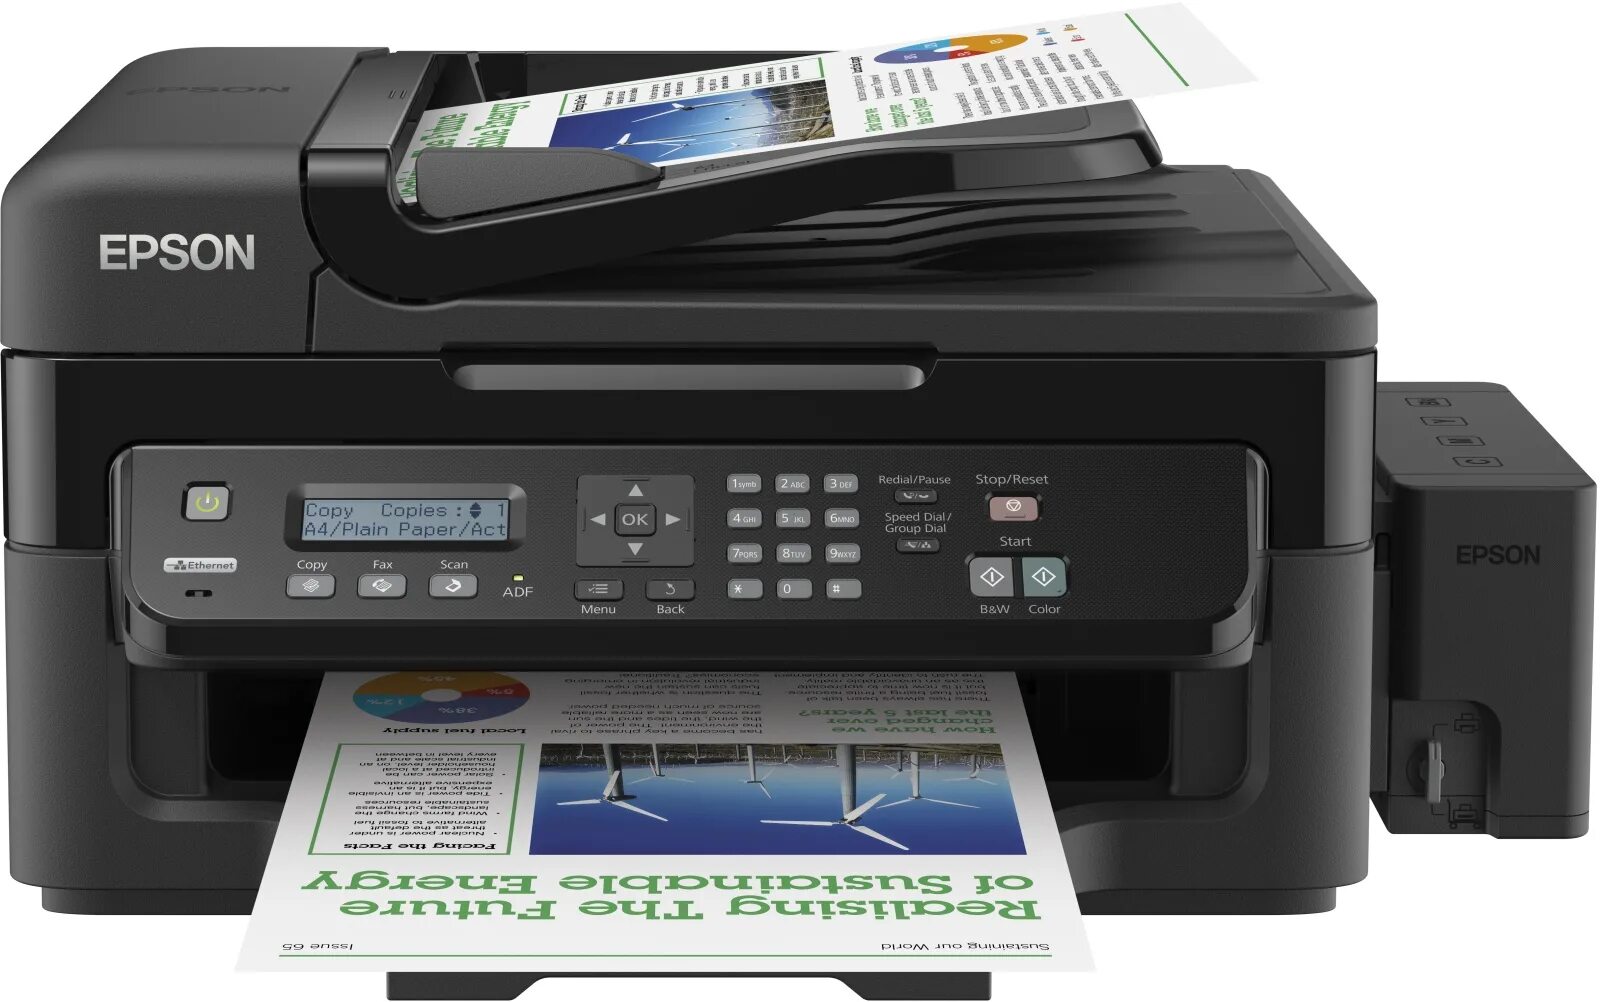 Types of printers. МФУ Epson l555. Epson l550. Принтер Epson m200. МФУ Epson l550.